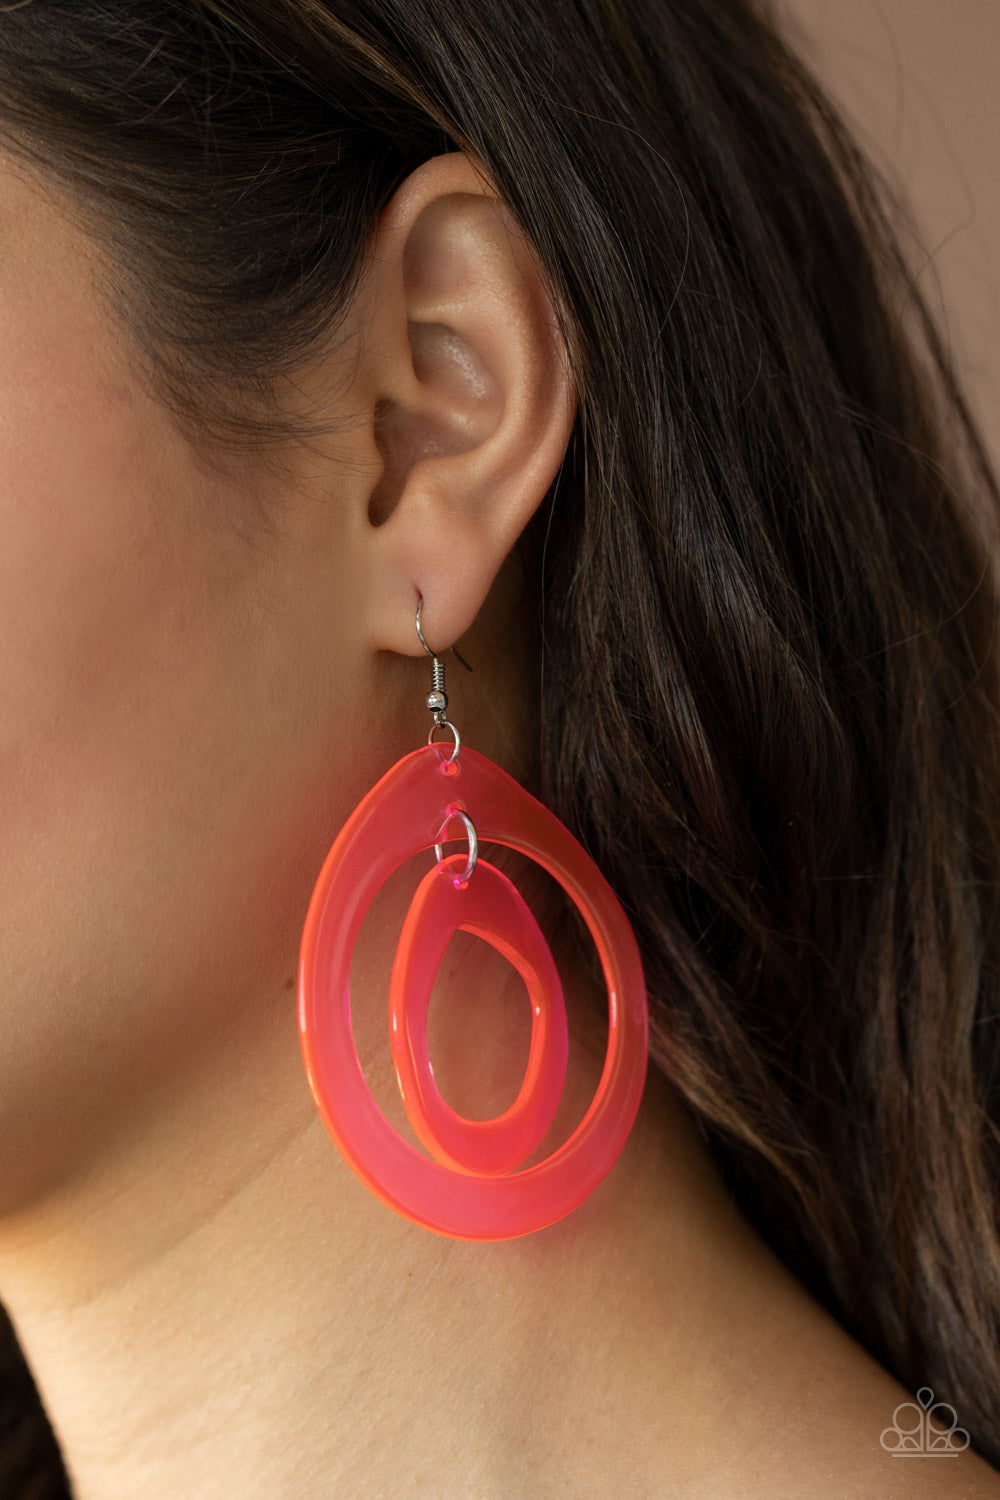 Show Your True NEONS - Pink Earrings - Paparazzi Accessories - Paparazzi Accessories 